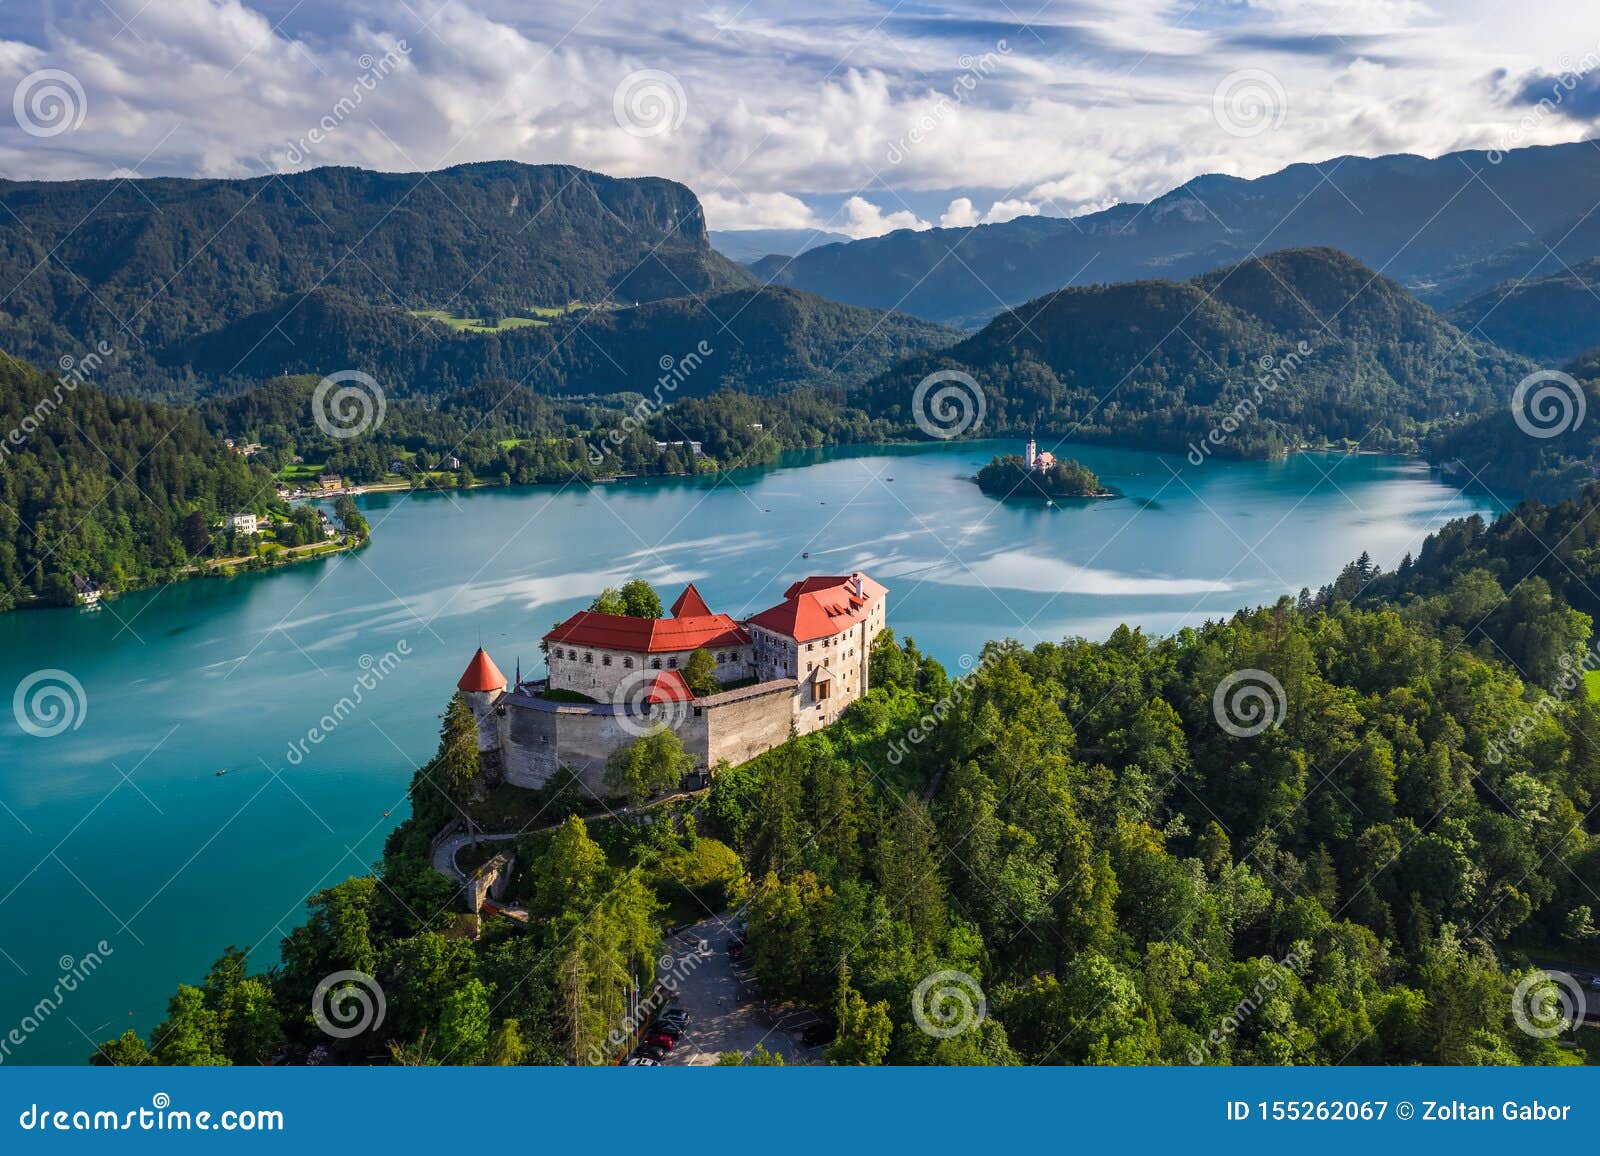 bled, slovenia - aerial drone view of beautiful bled castle blejski grad with lake bled blejsko jezero